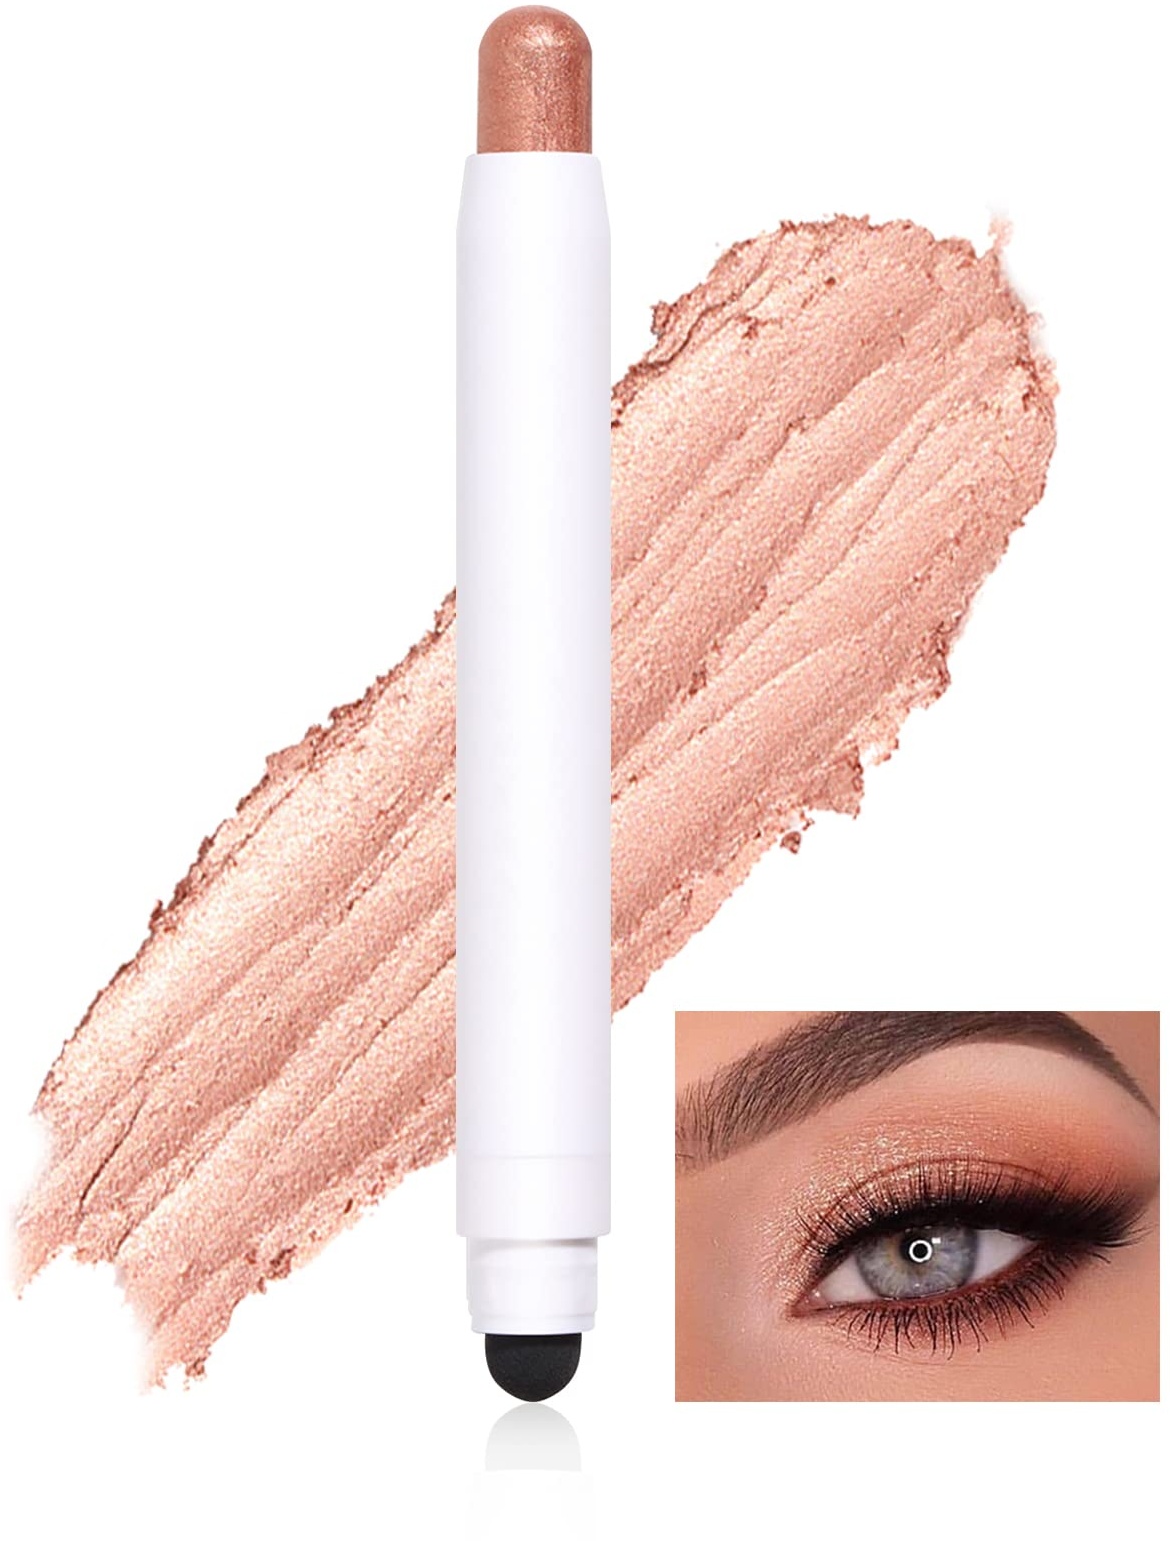 Cream Eyeshadow Pencil, Shimmer Eyeshadow Stick, Matte Eye Makeup Pen, Waterproof Long-lasting Glitter Eye Shadow Makeup with Soft Sponge Brush for Eye Makeup(01)